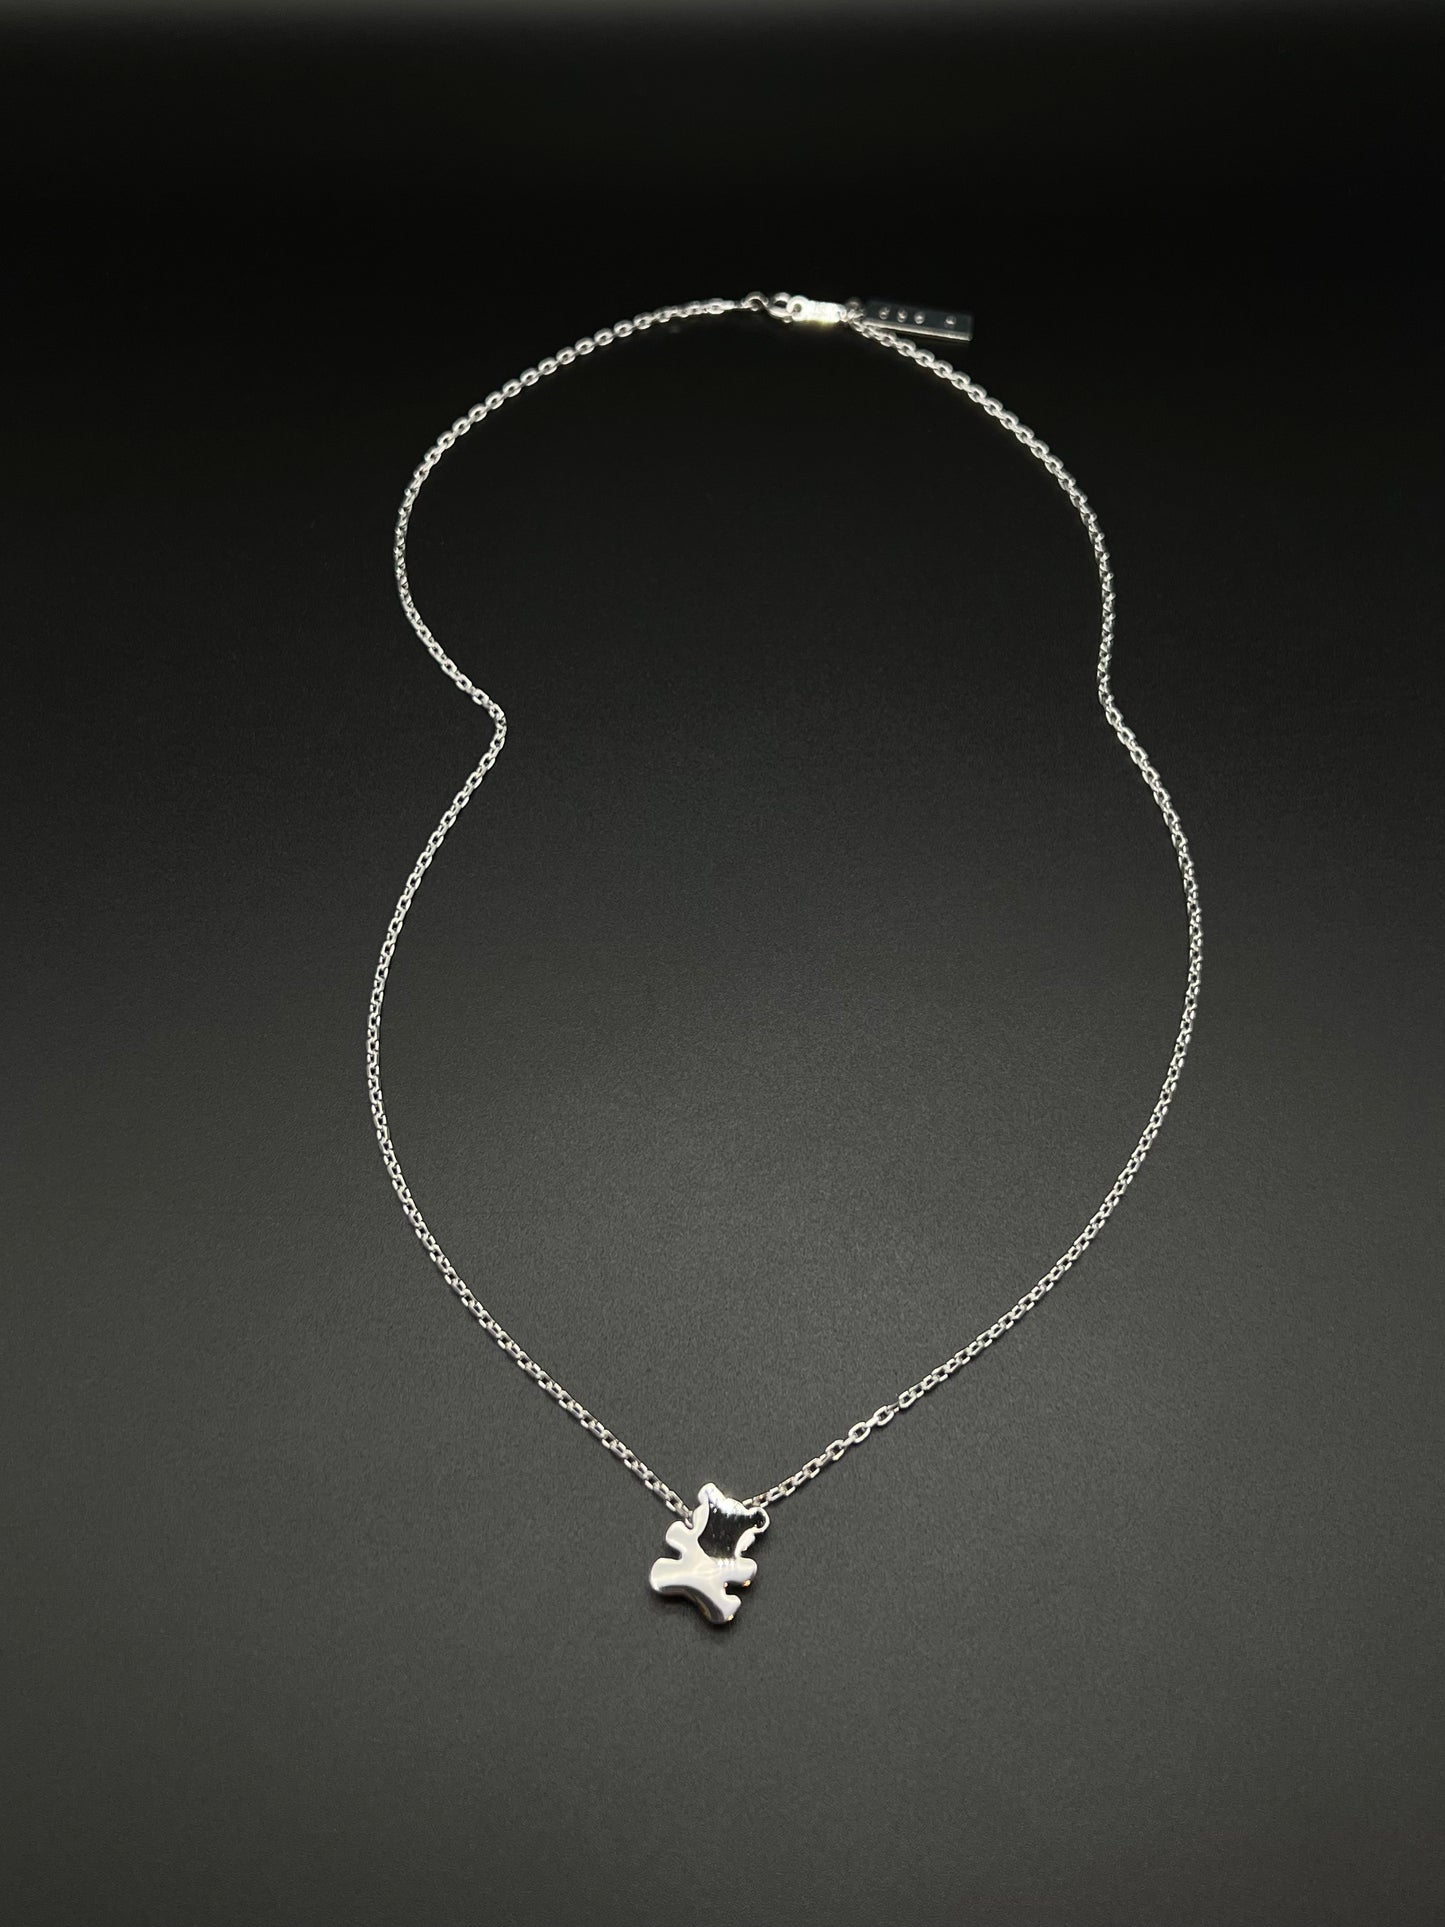 Bear necklace -silver925